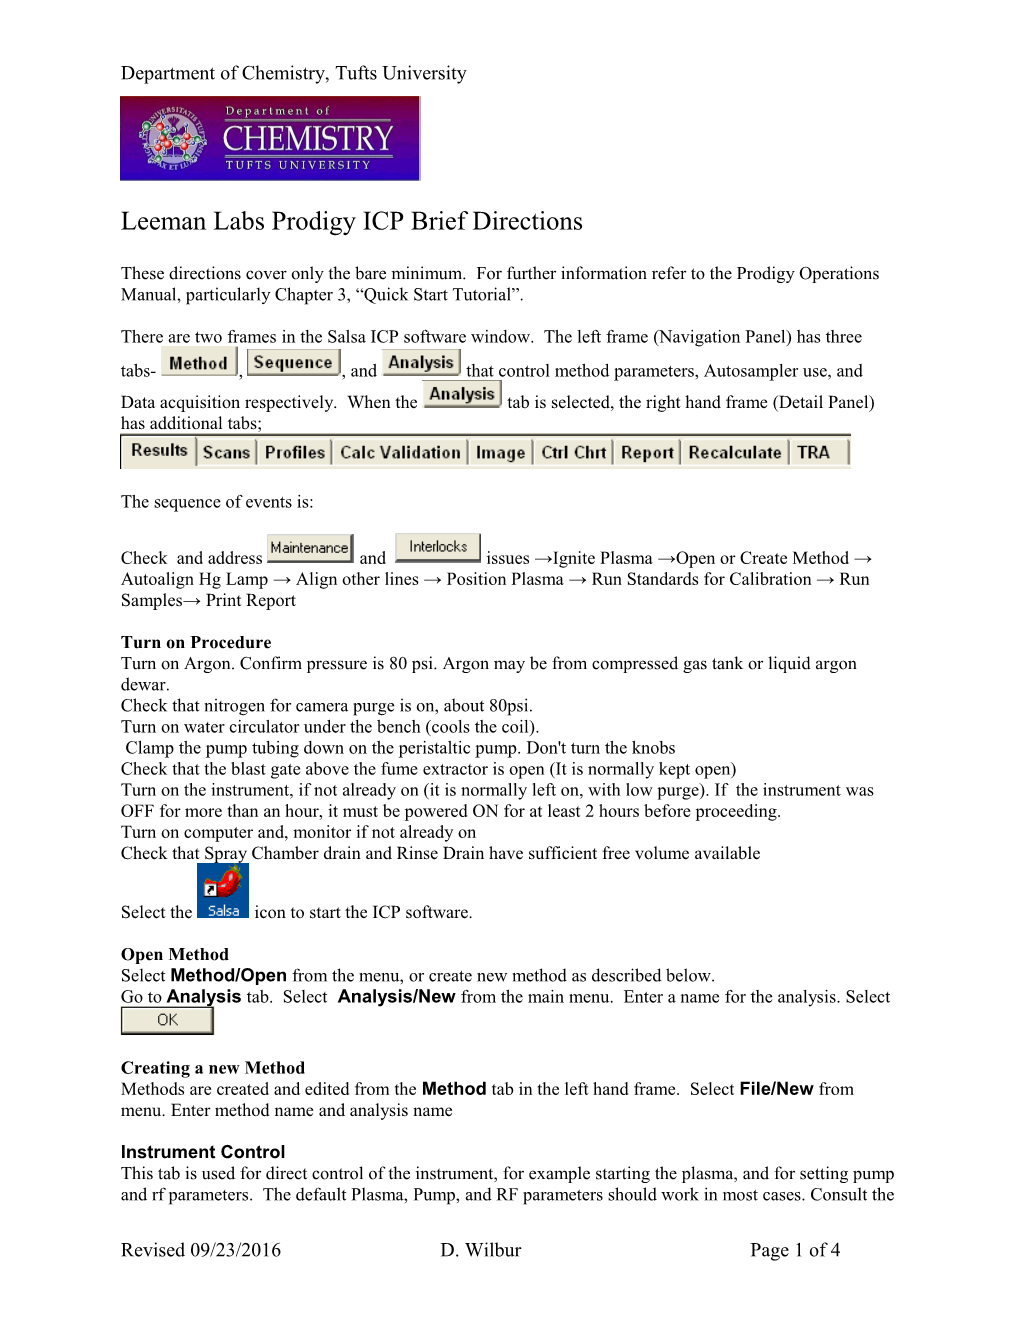 Leeman Labs Prodigy ICP Brief Directions